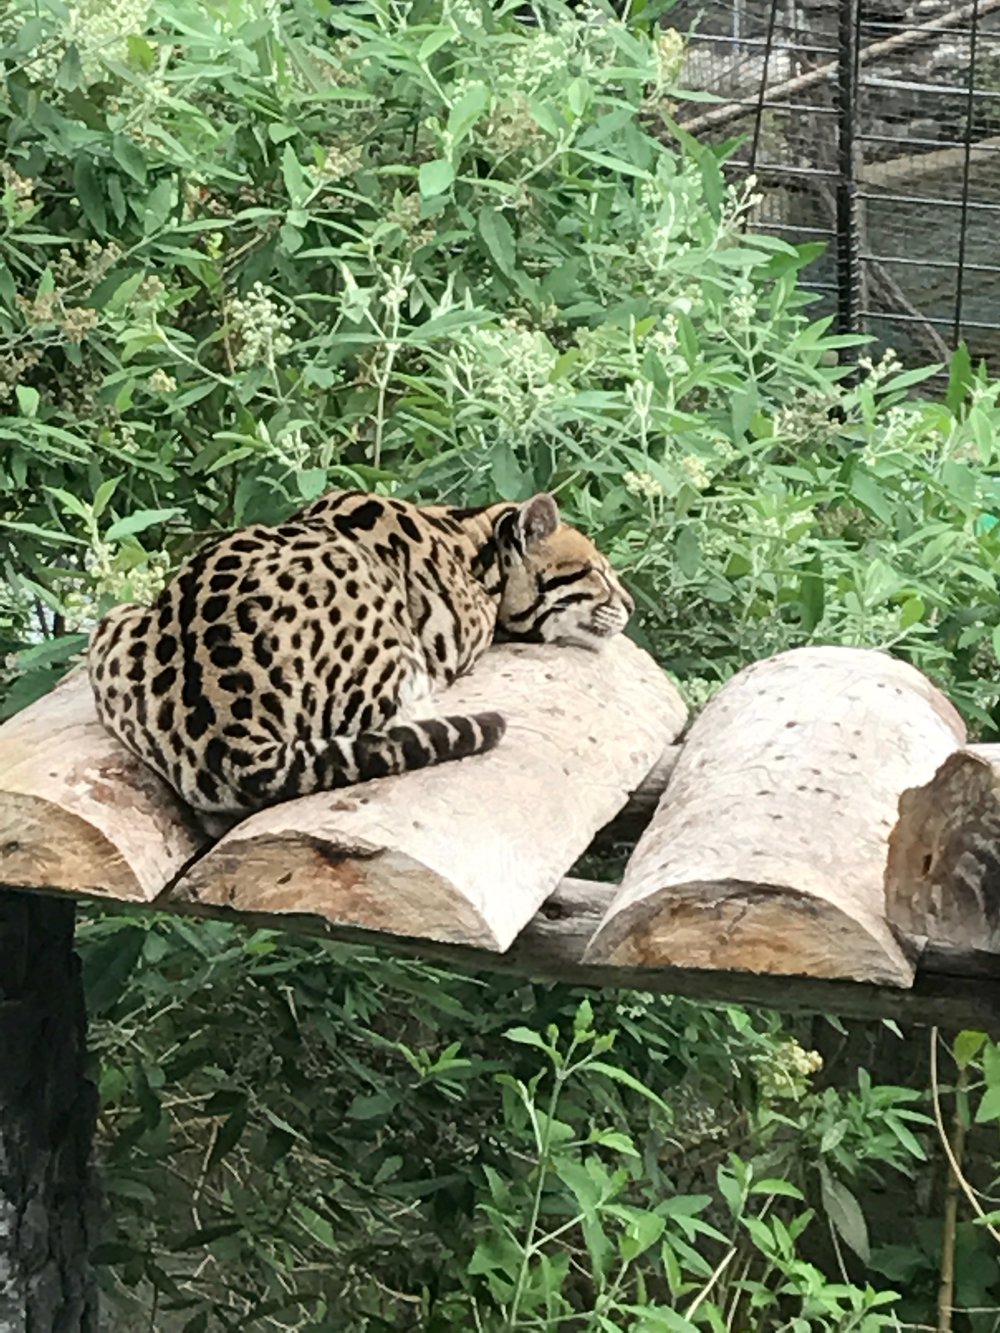 Napping at the zoo